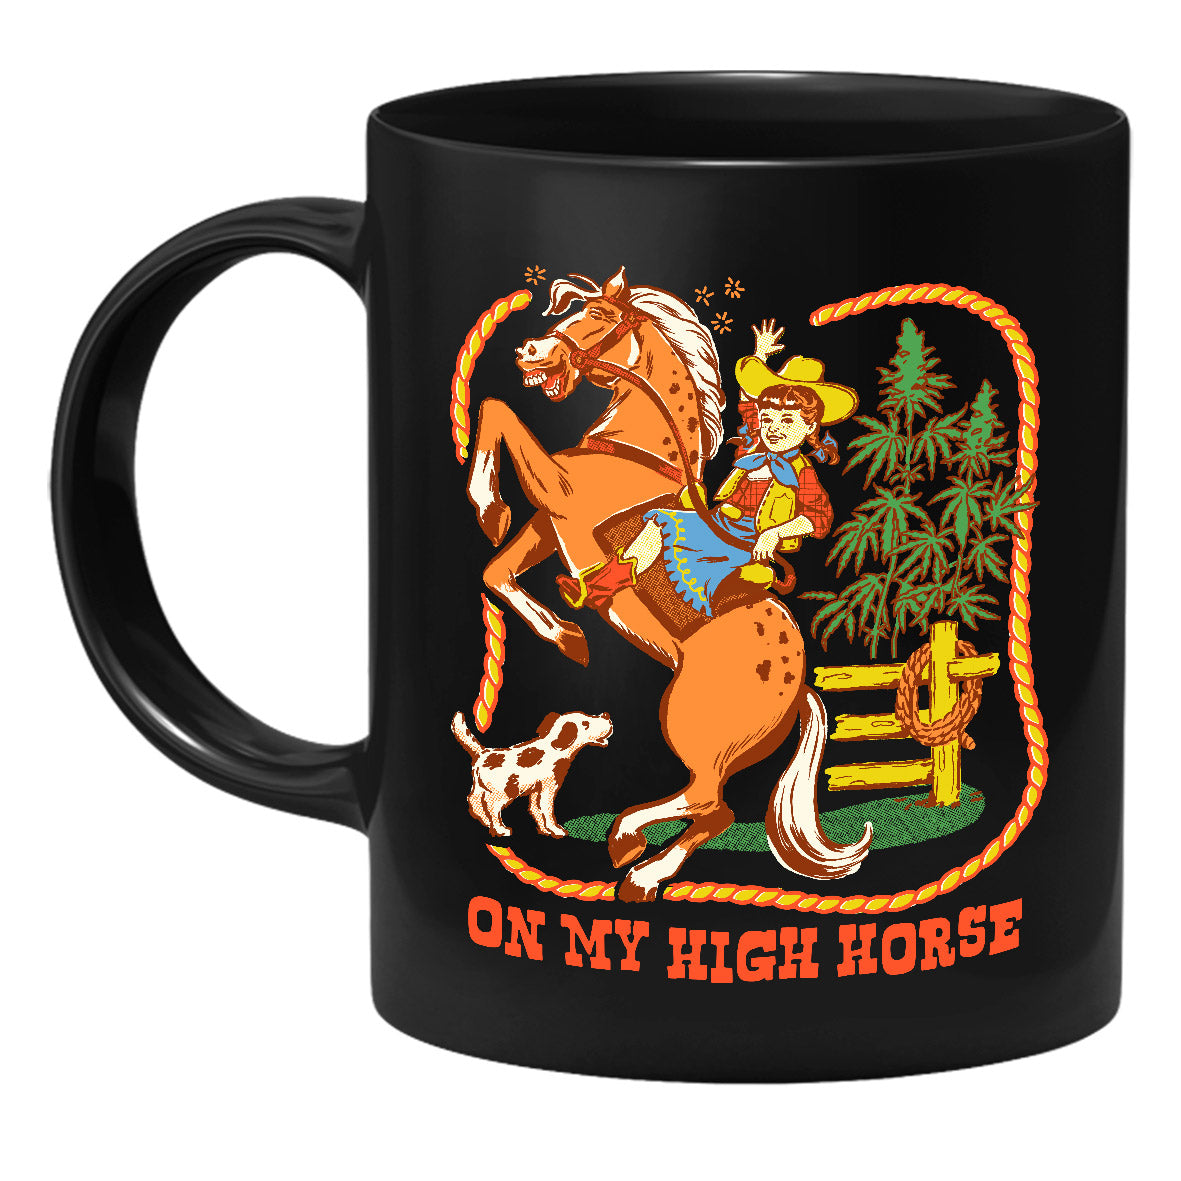 Steven Rhodes - On my high horse - Mug